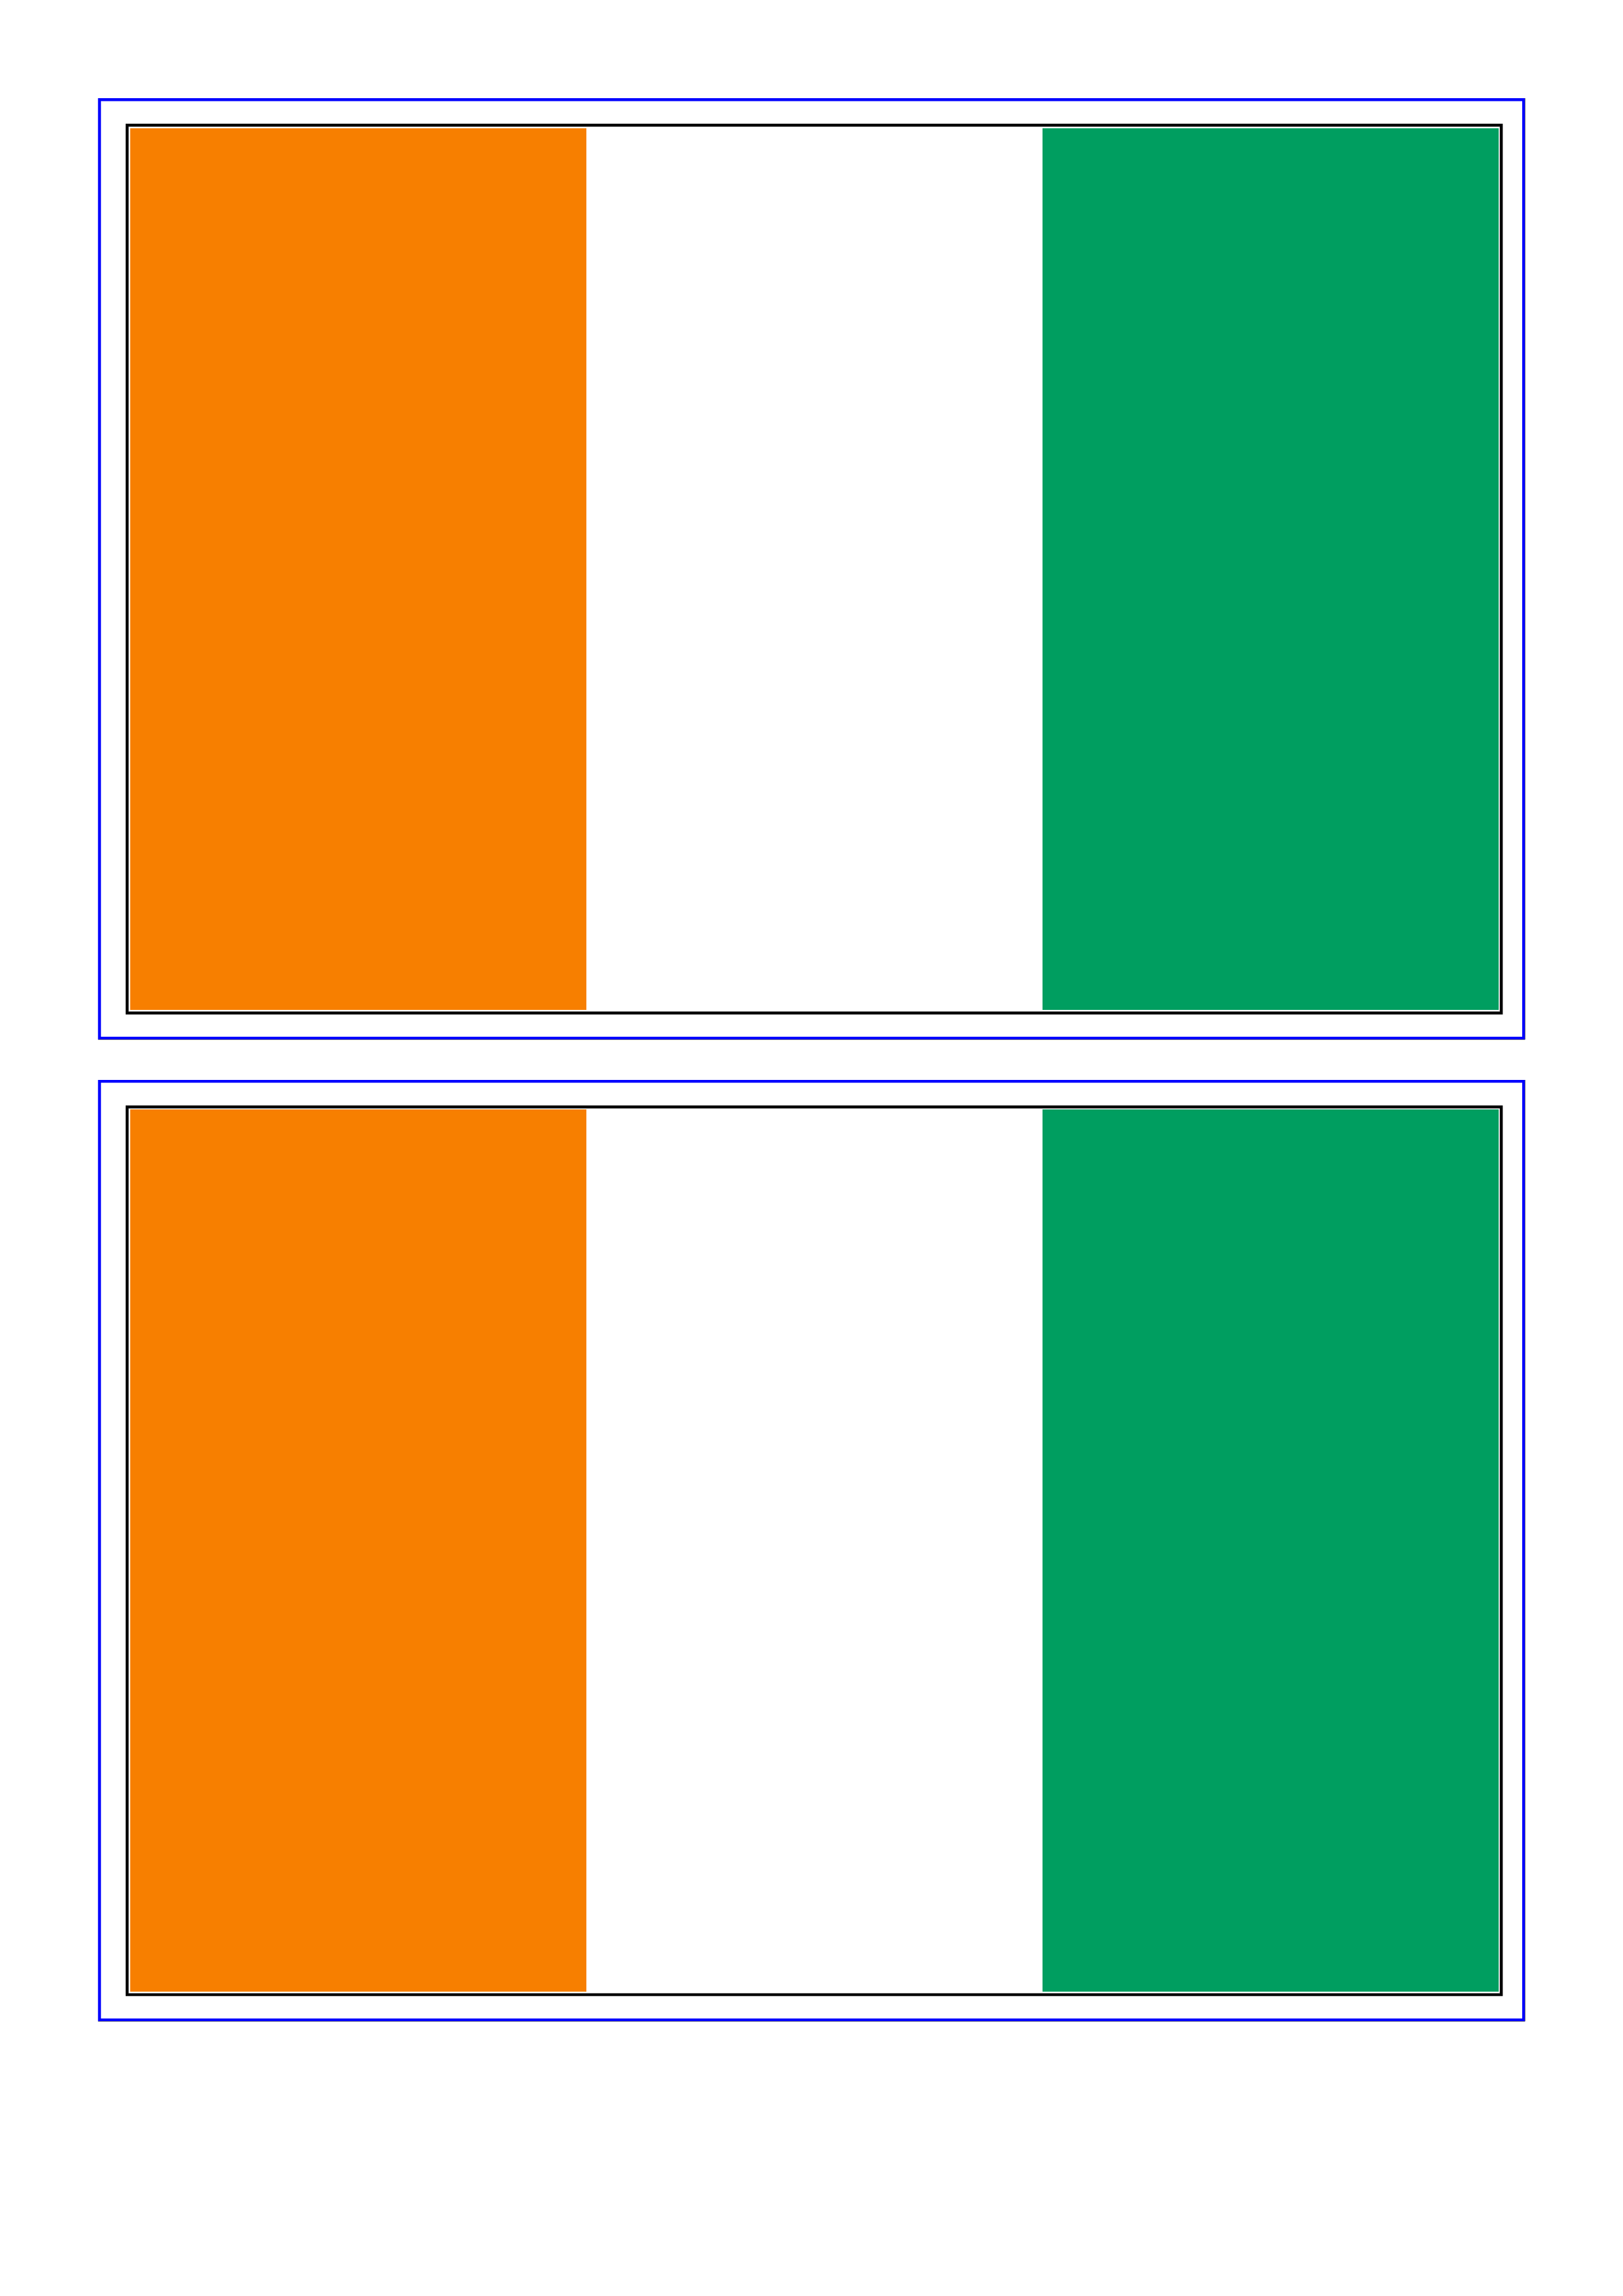 Ivory Coast Flag PNG HD Quality